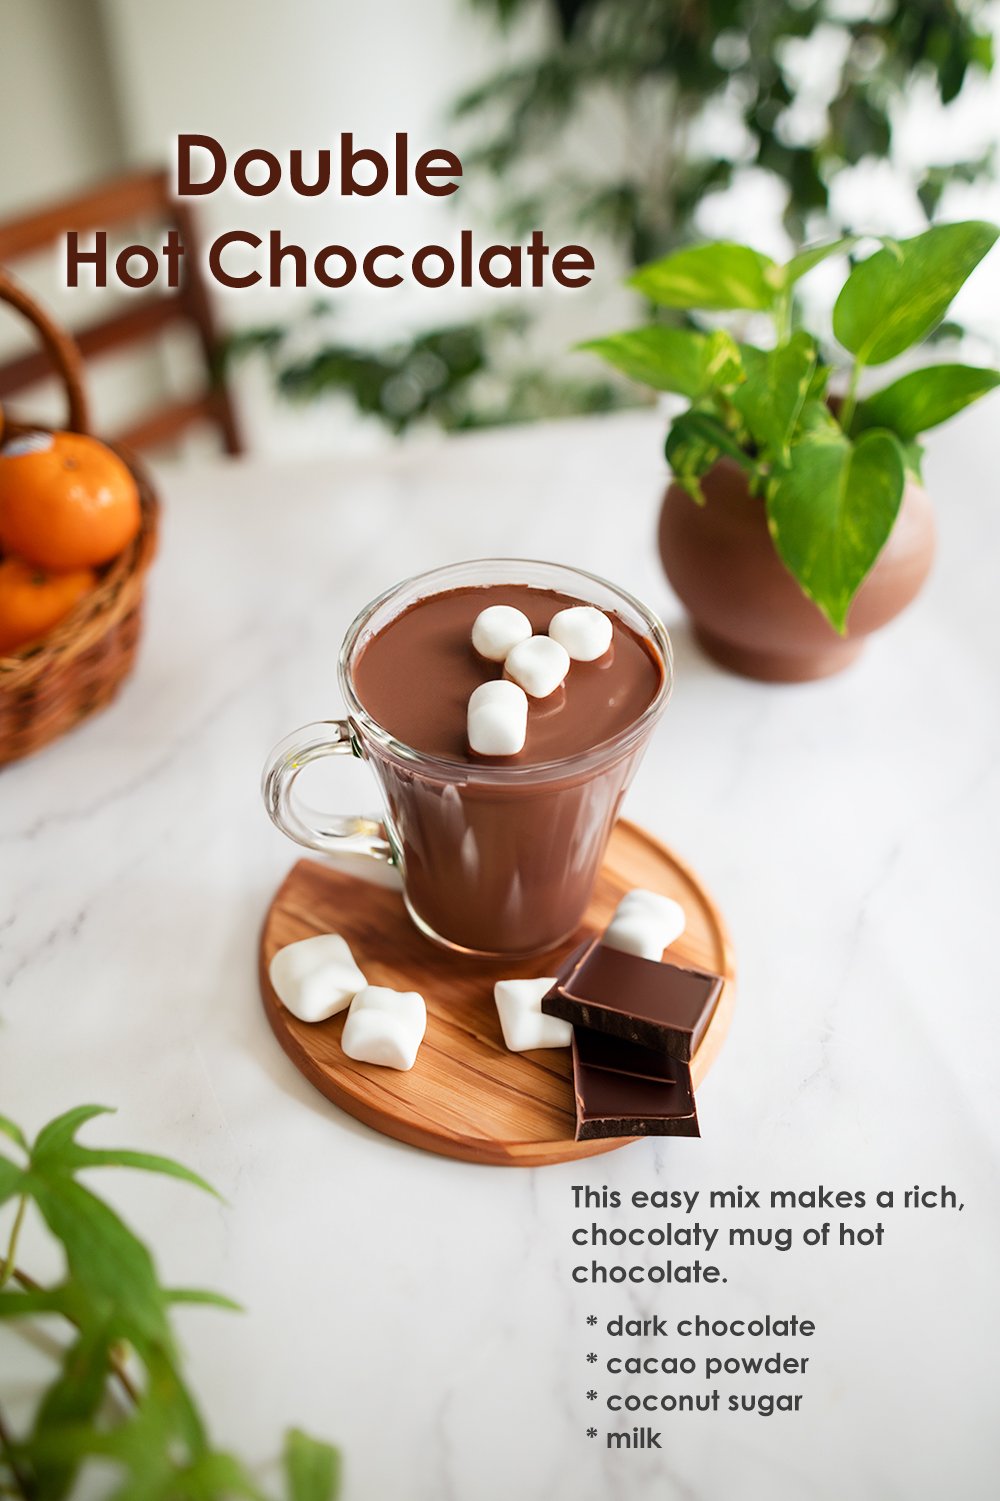 Double hot chocolate